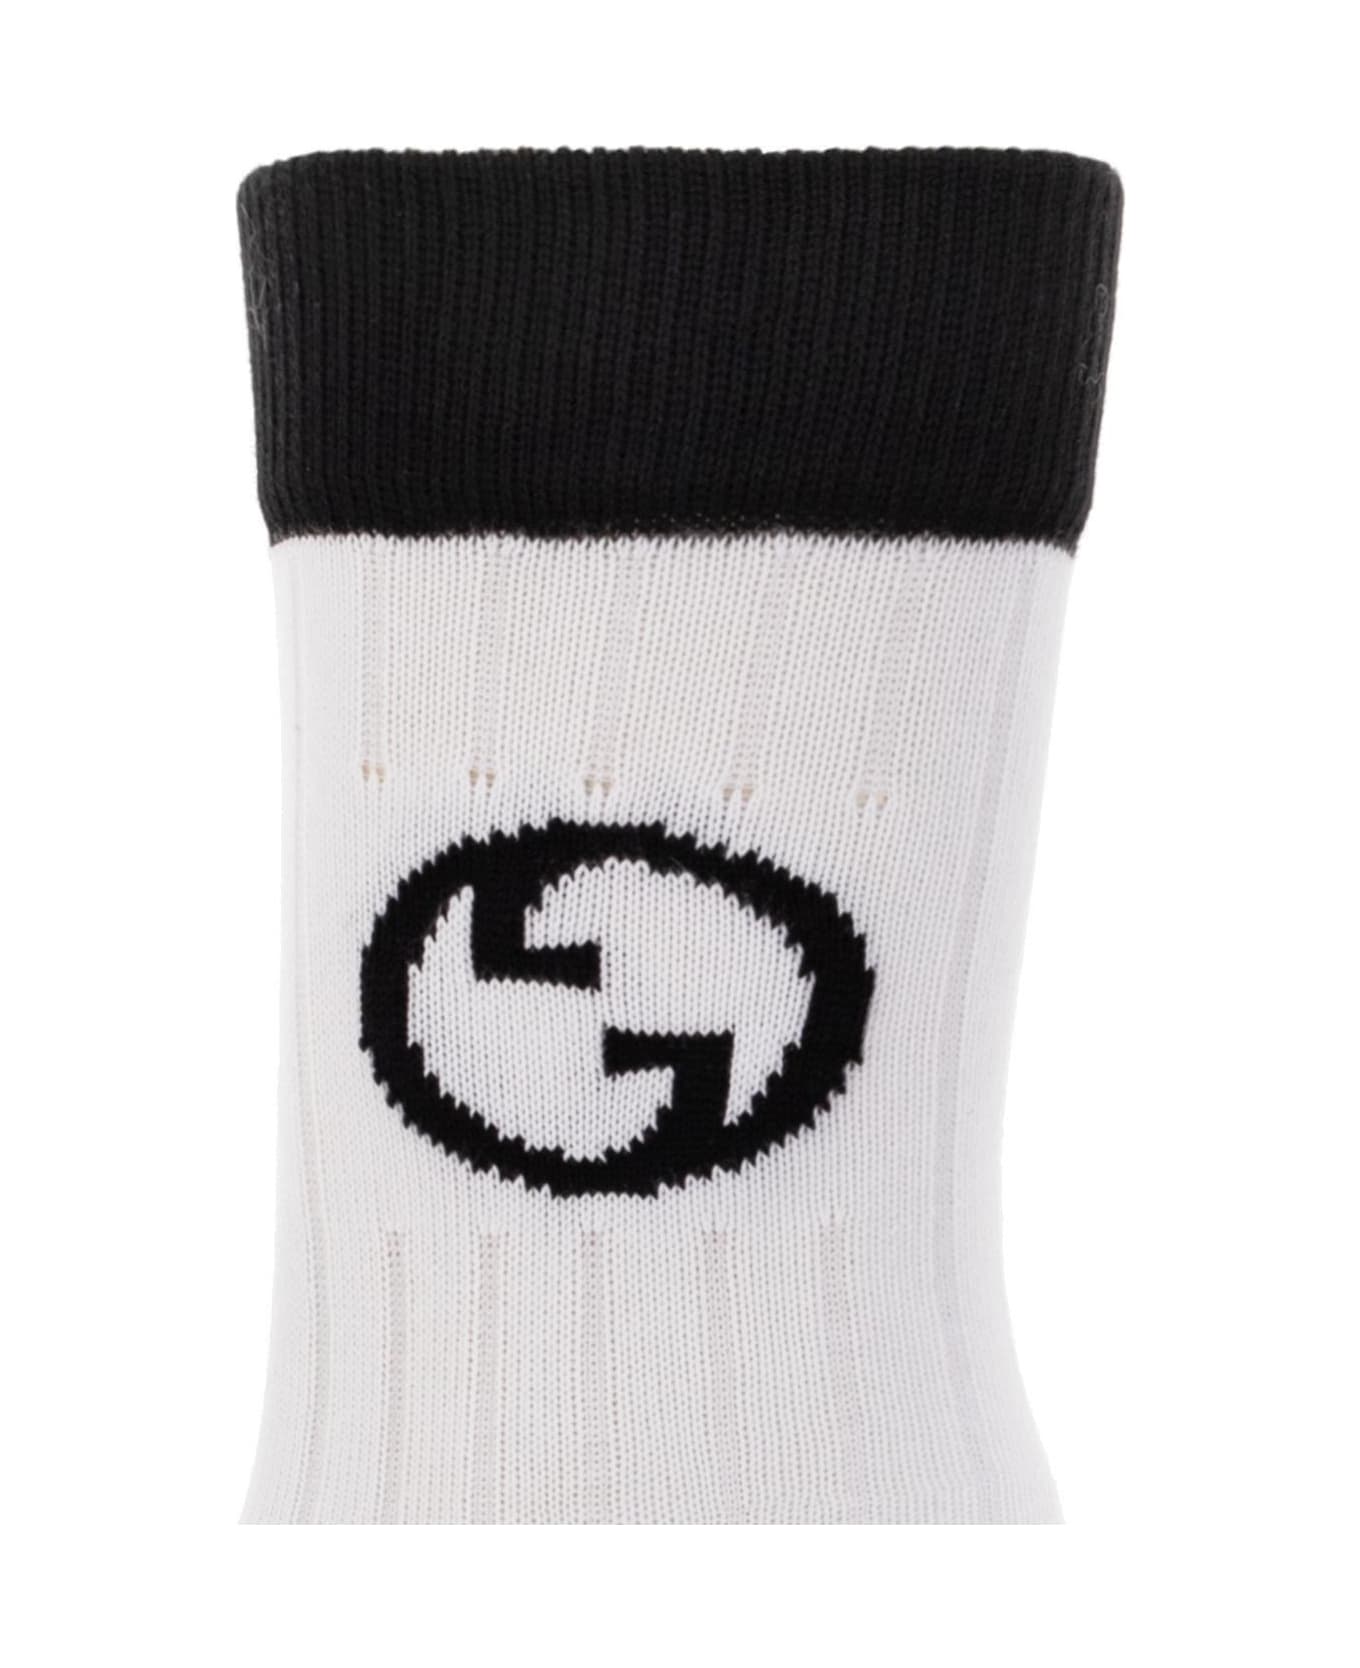 Gucci Interlocking G Logo Embroidered Socks